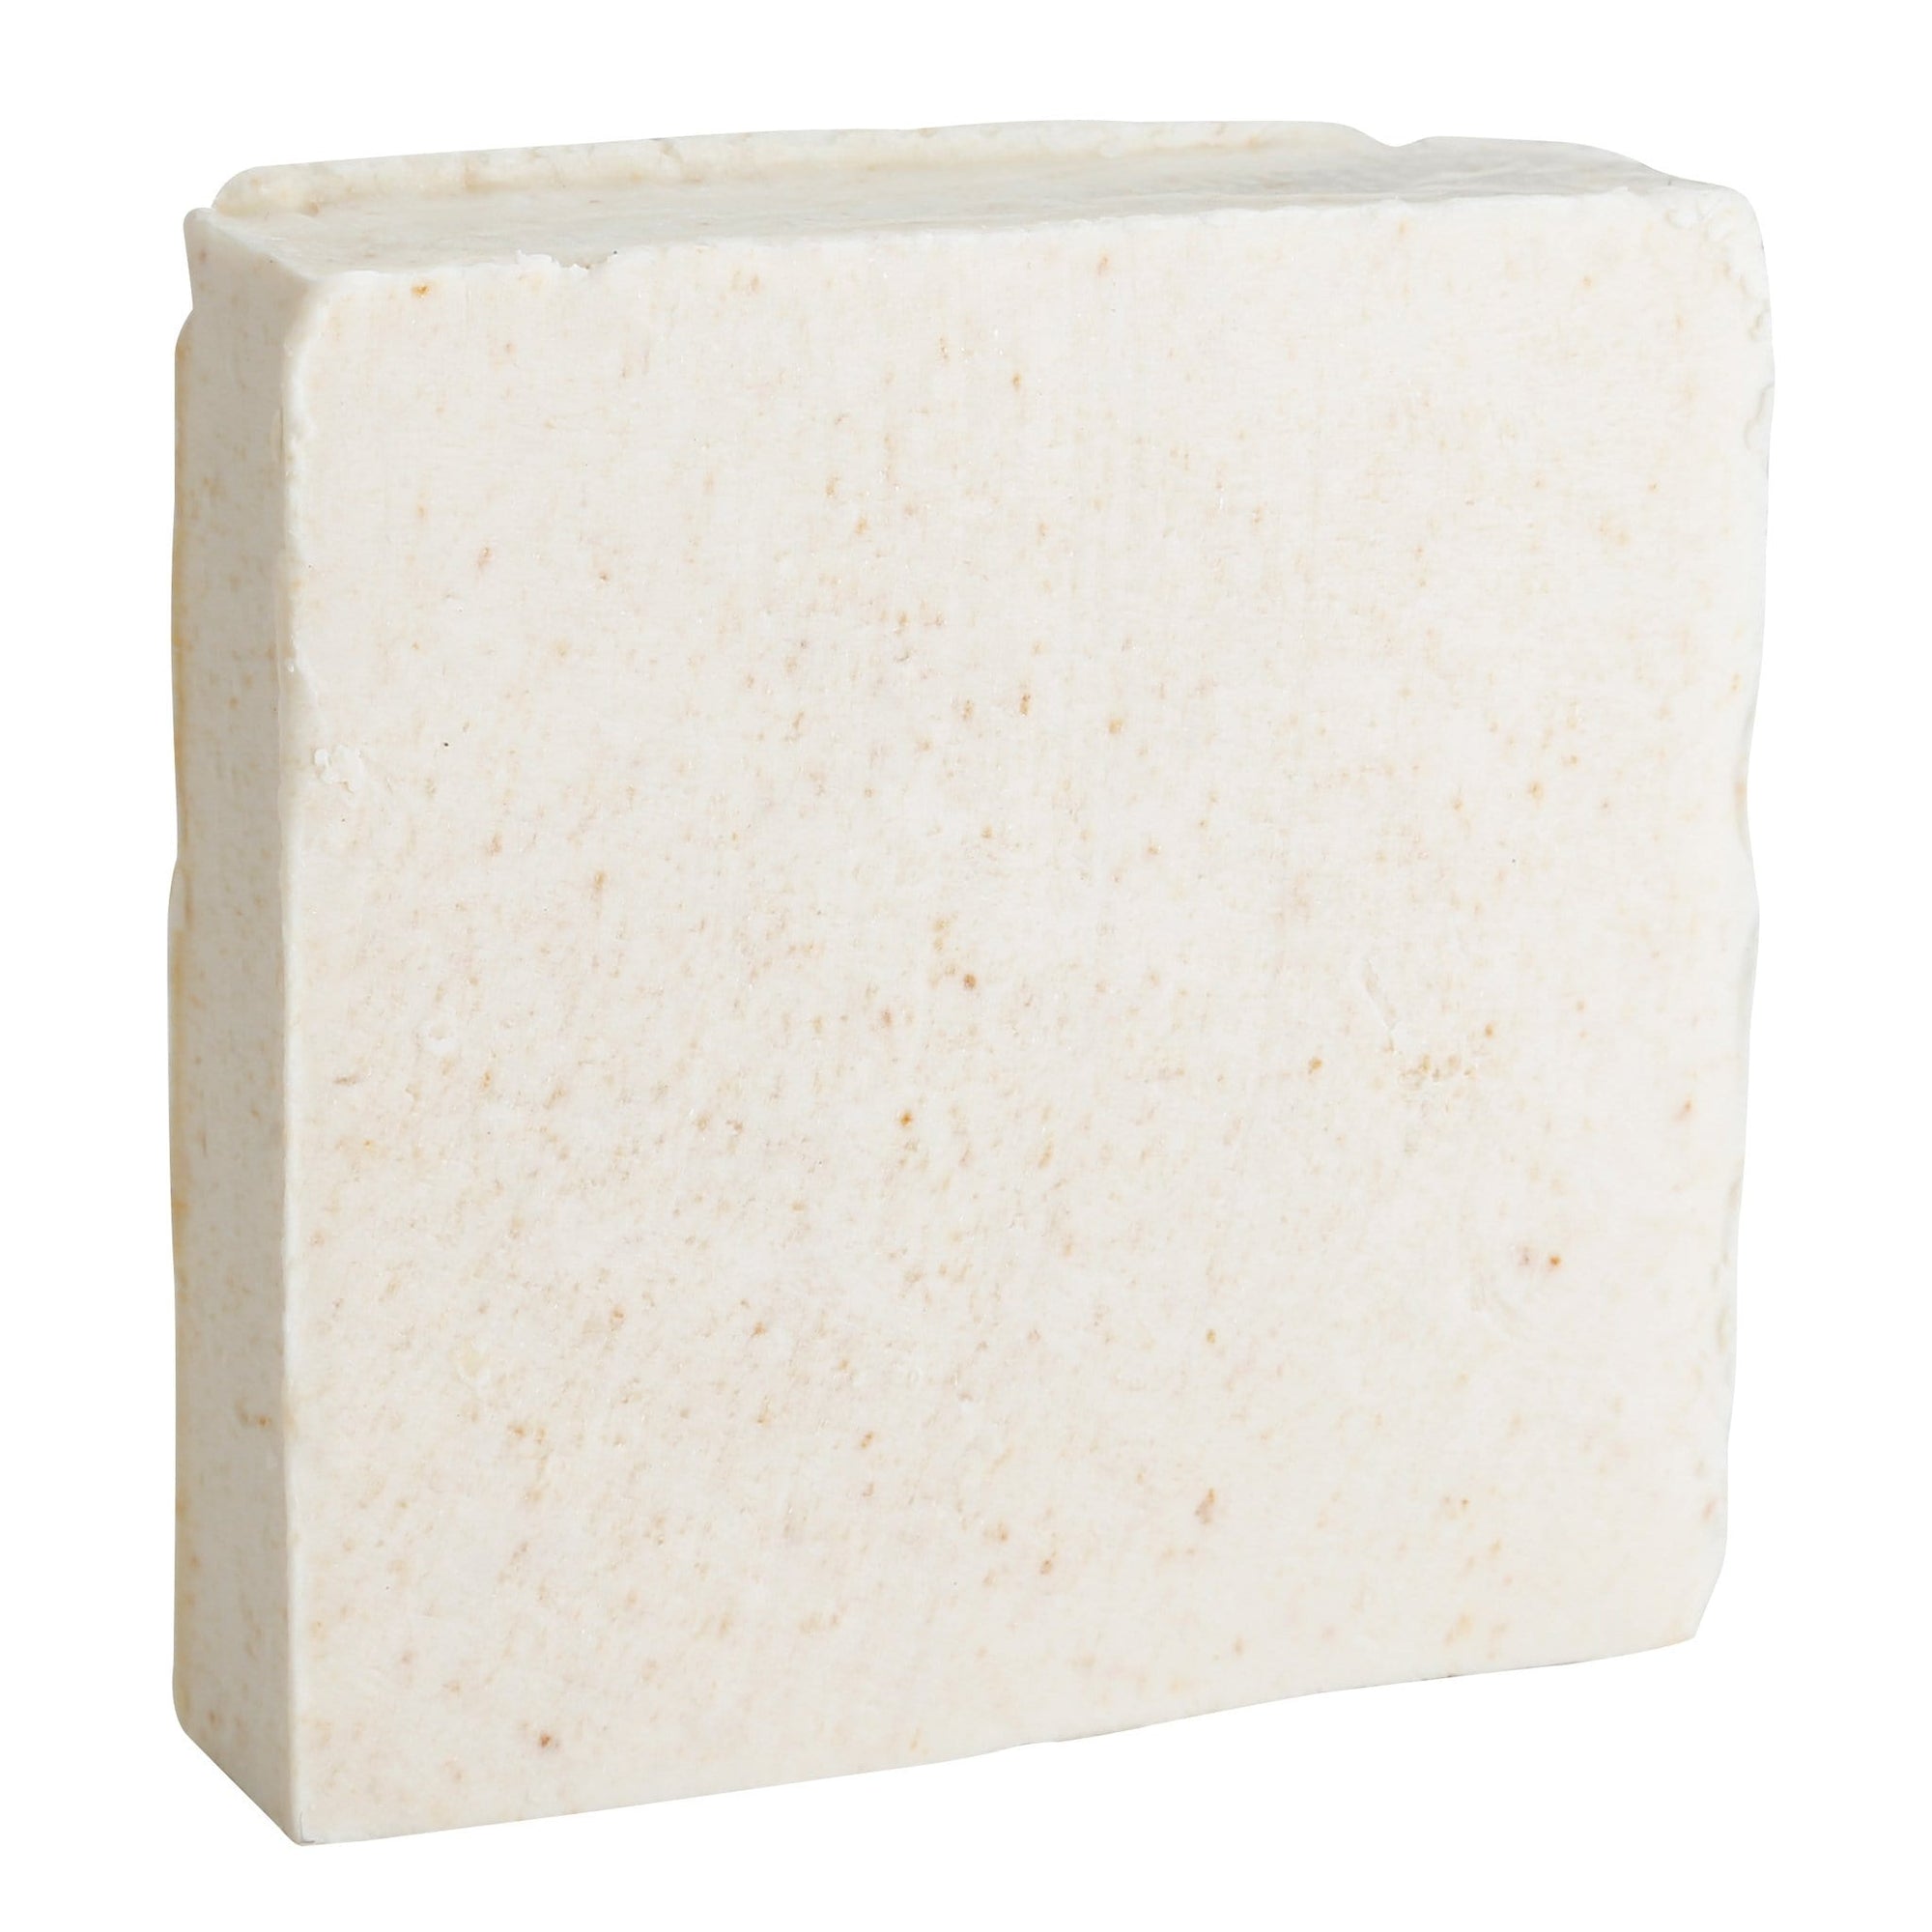 Lady Godiva Natural Soap